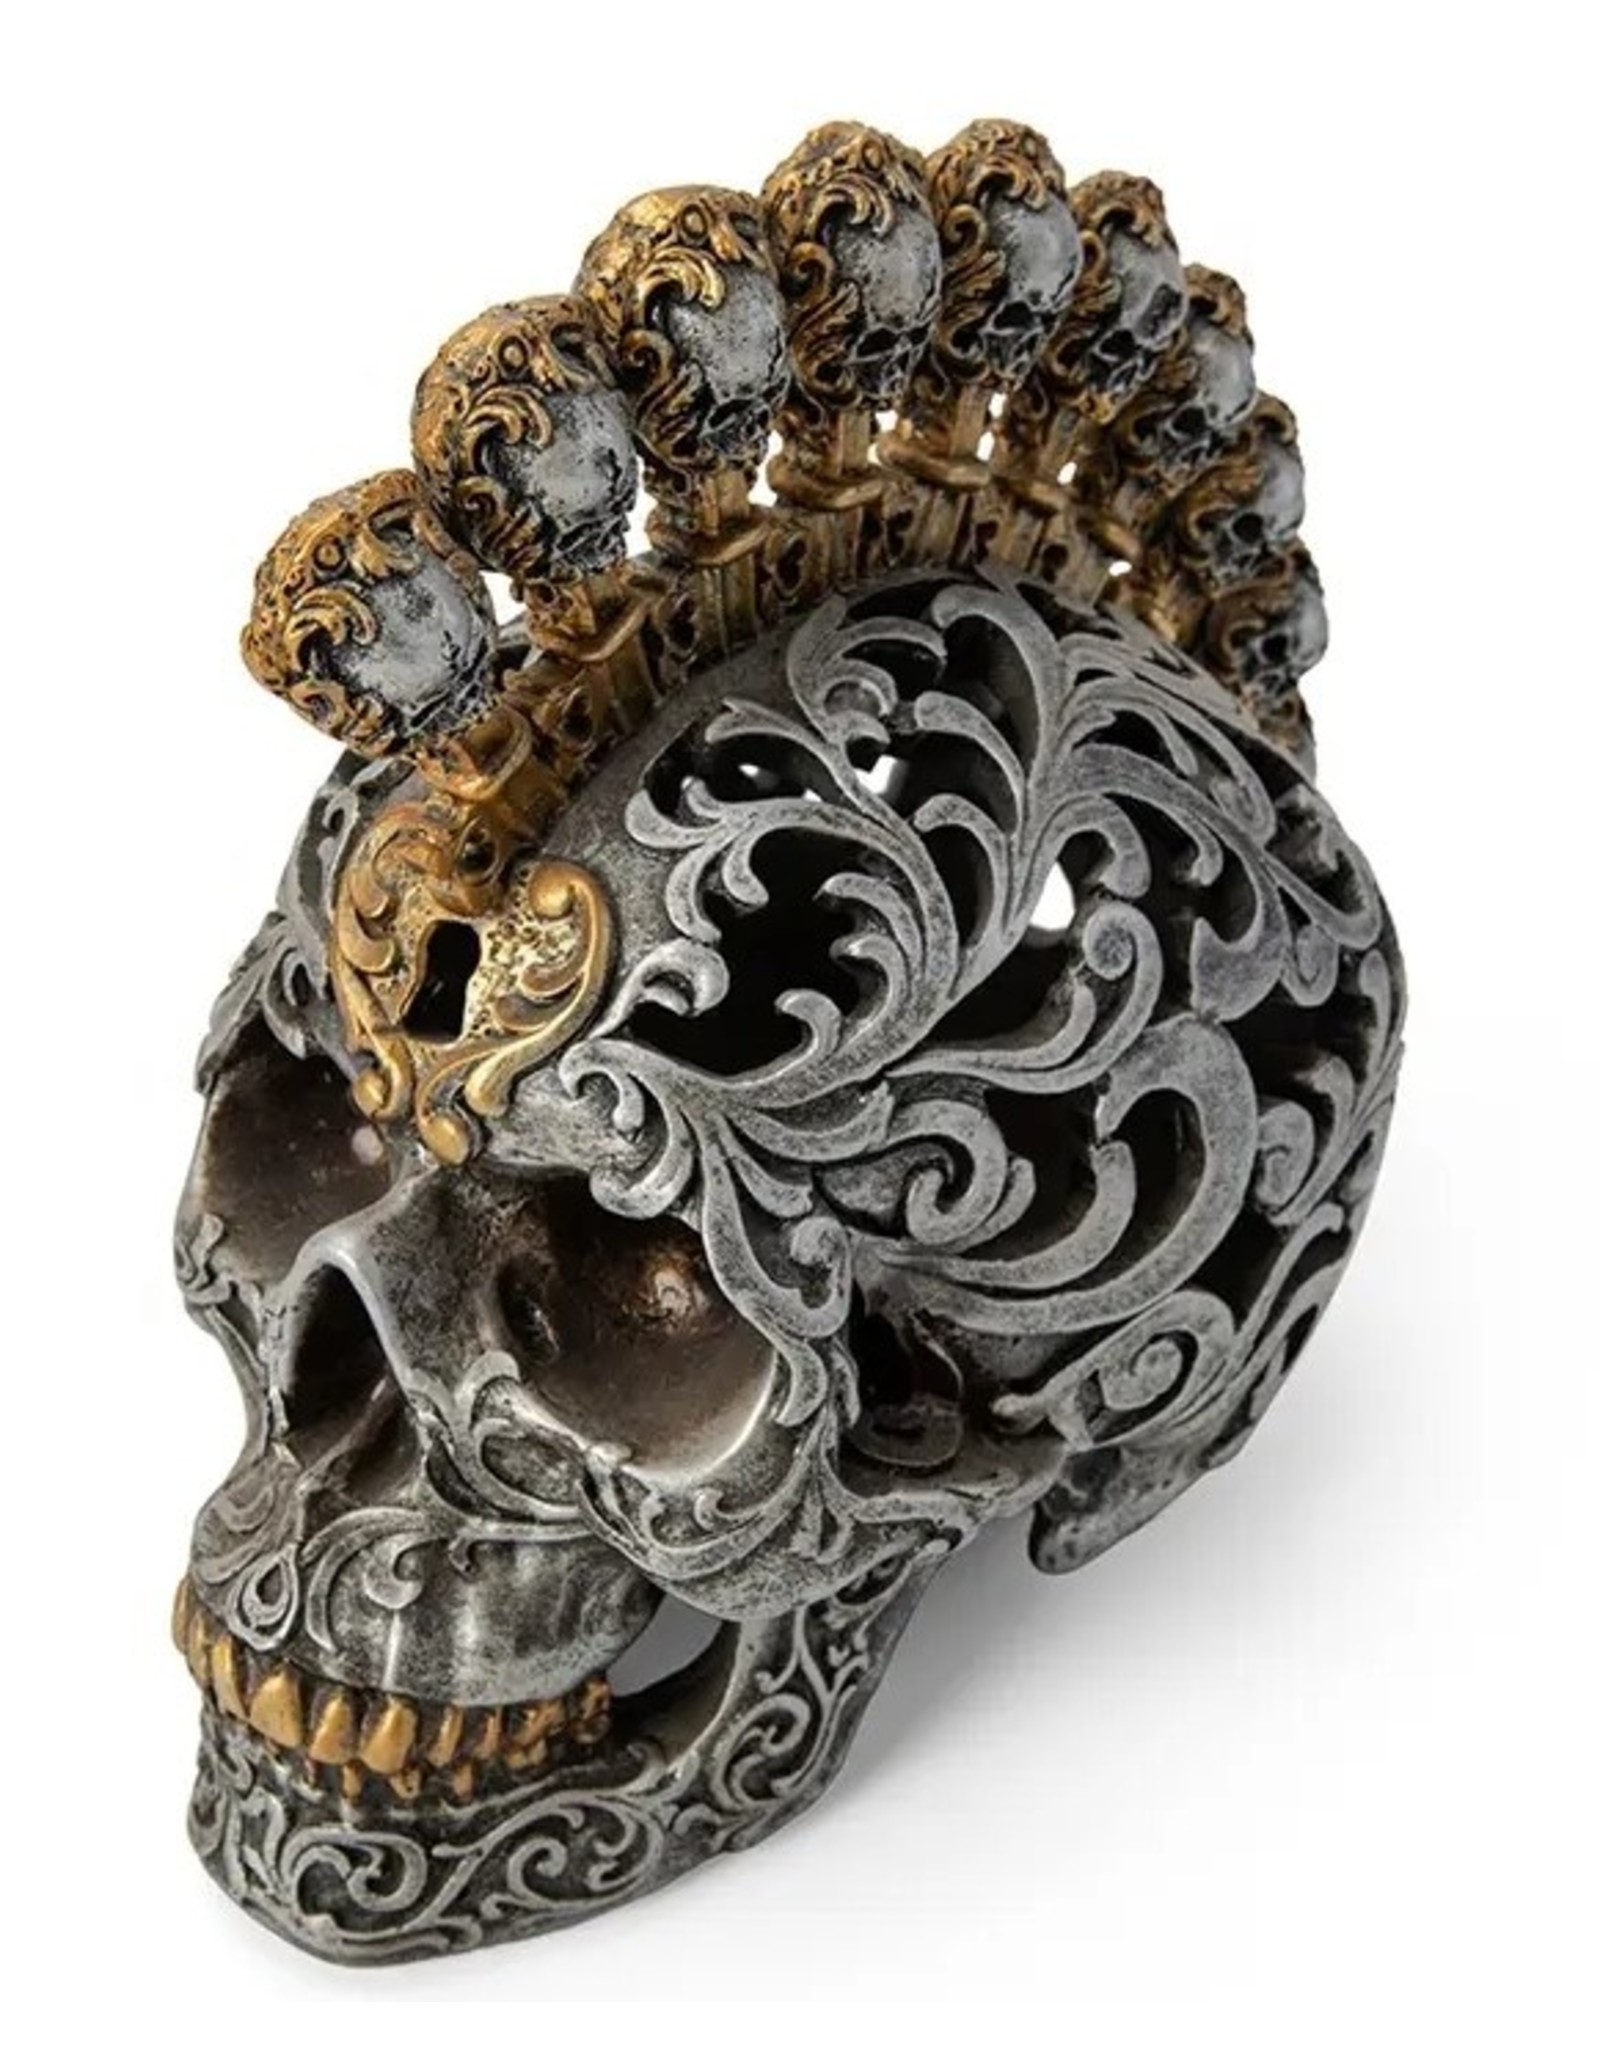 Trukado Skulls - Gothic Baroque Skull with a Key and Lock Mohawk large